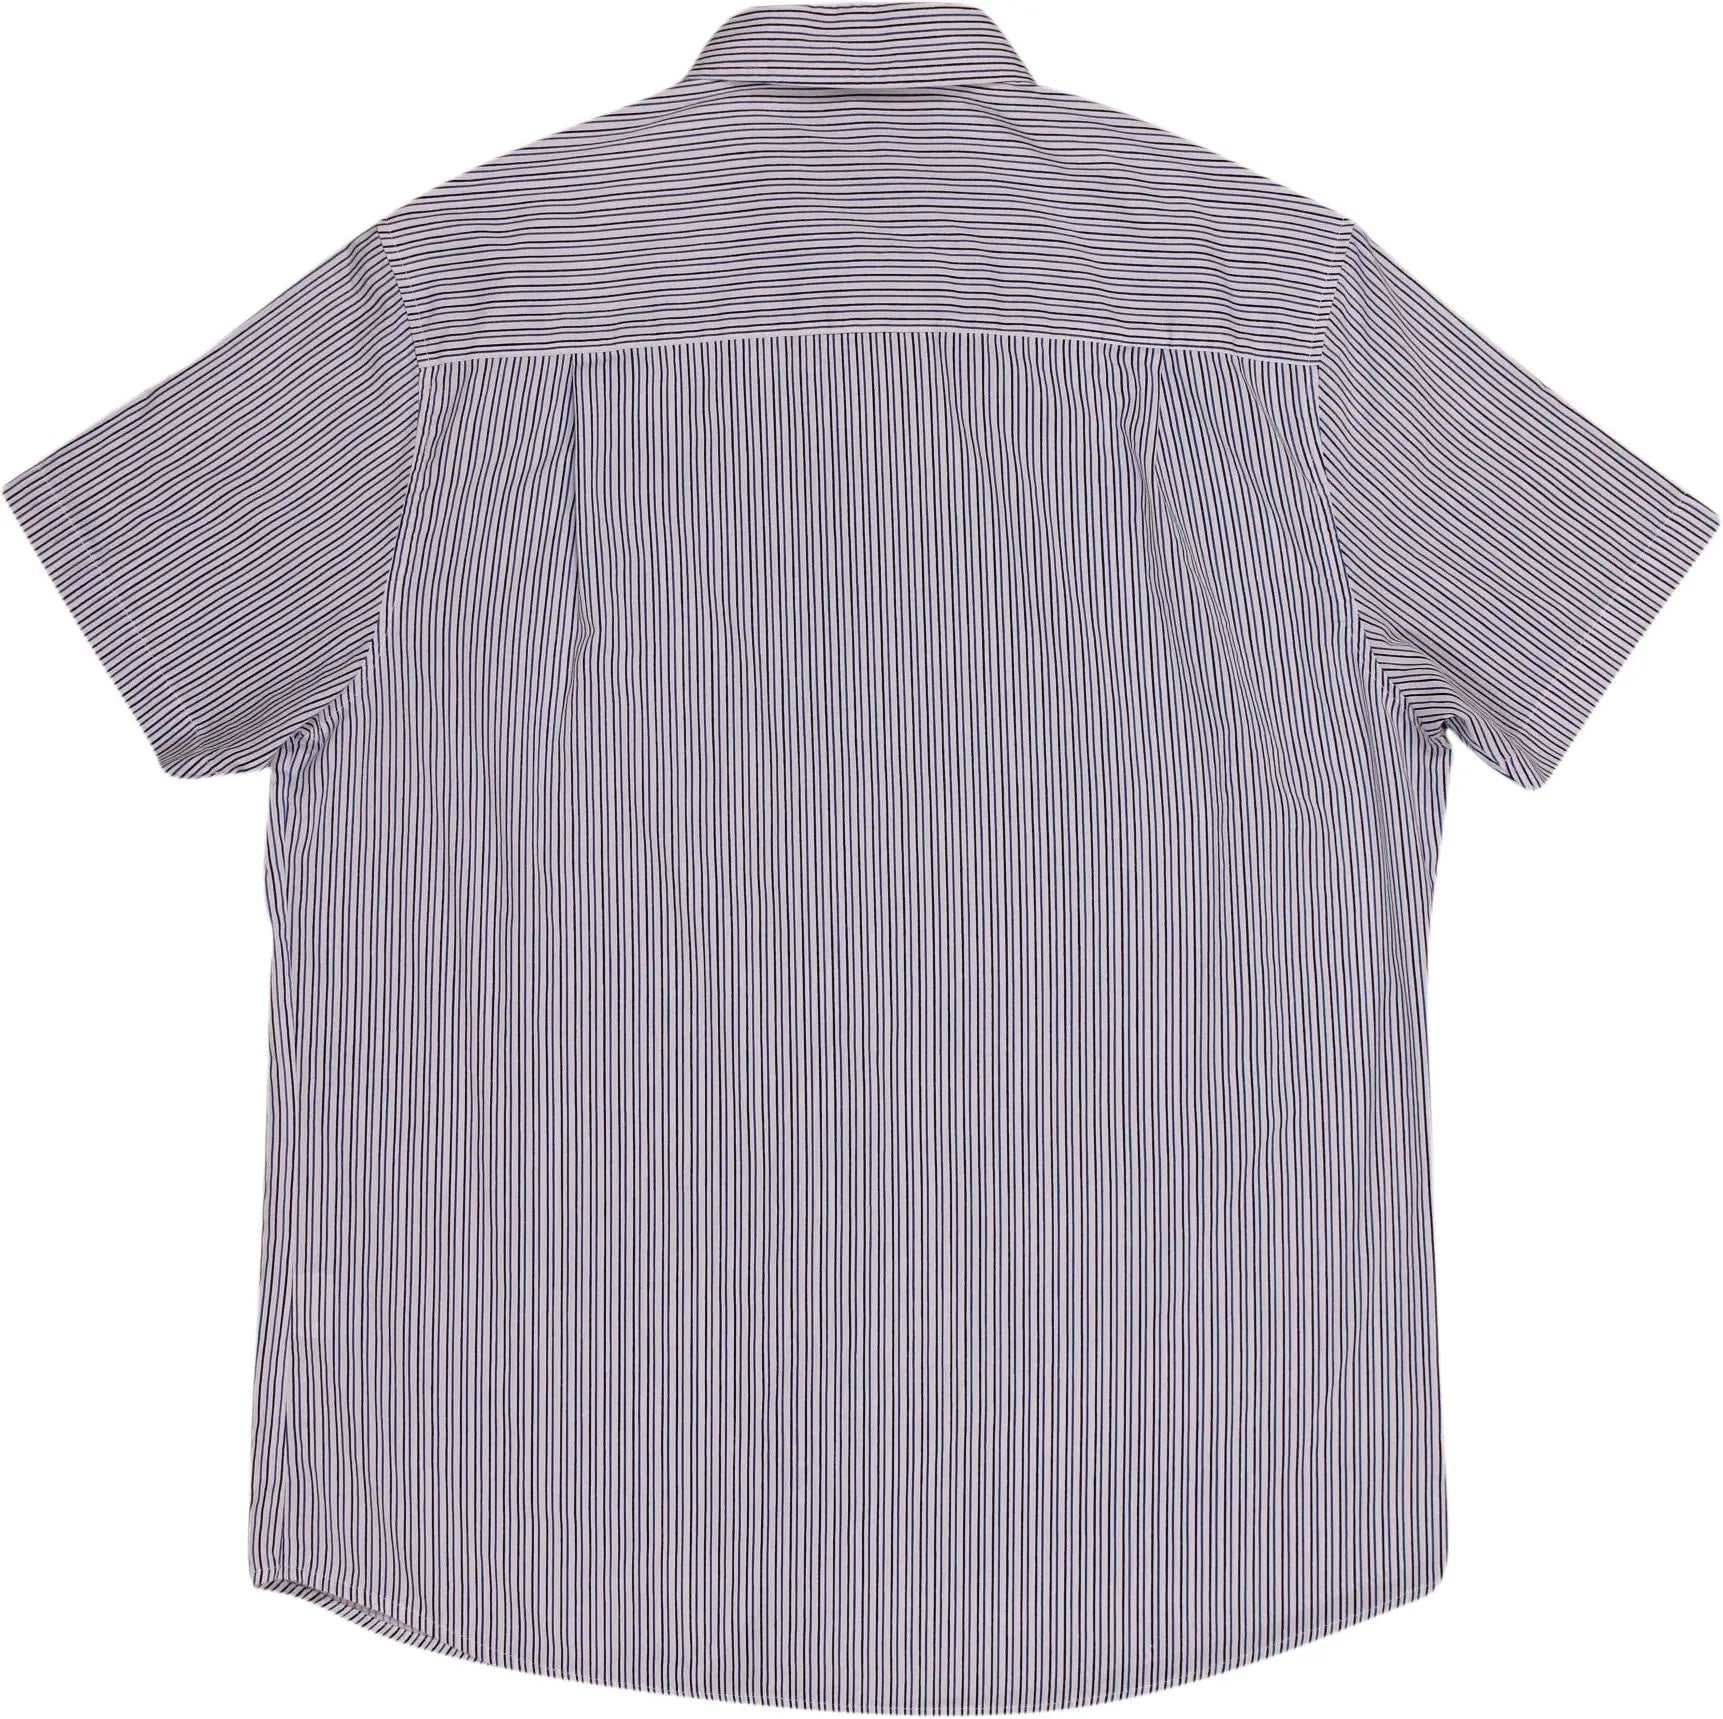 Portonova - BLUE2463- ThriftTale.com - Vintage and second handclothing